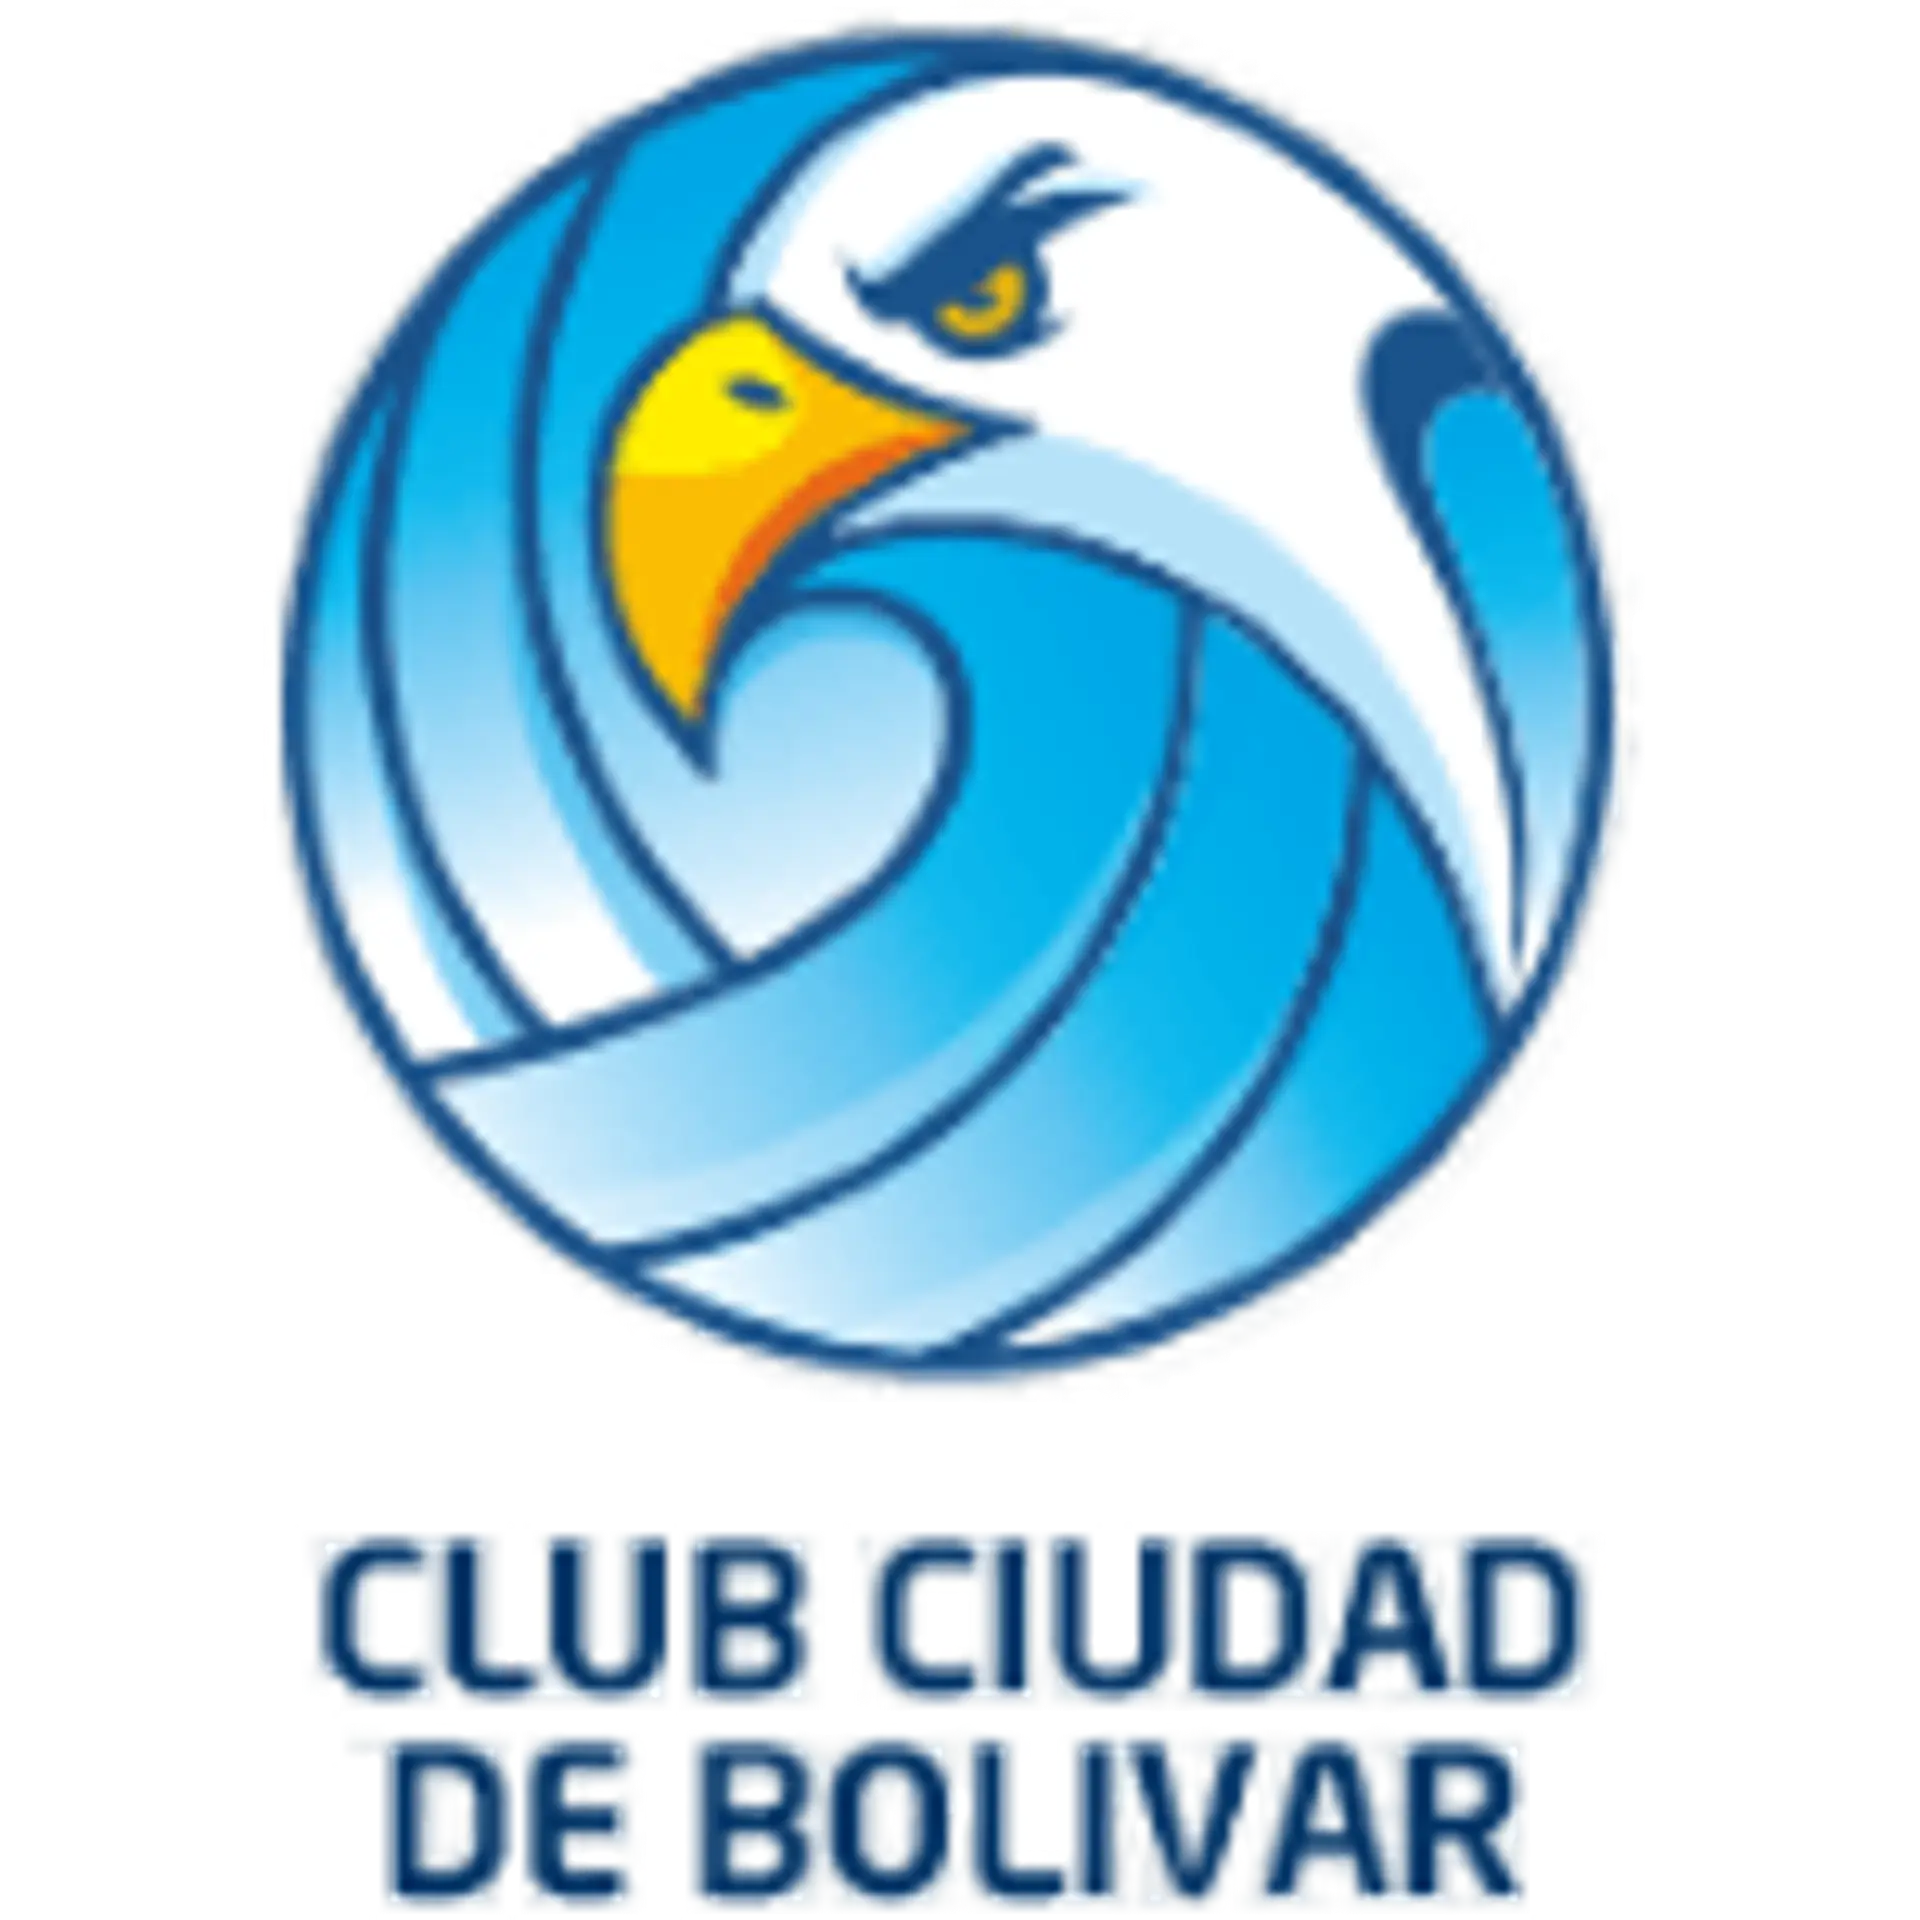 Club Ciudad de Bolívar